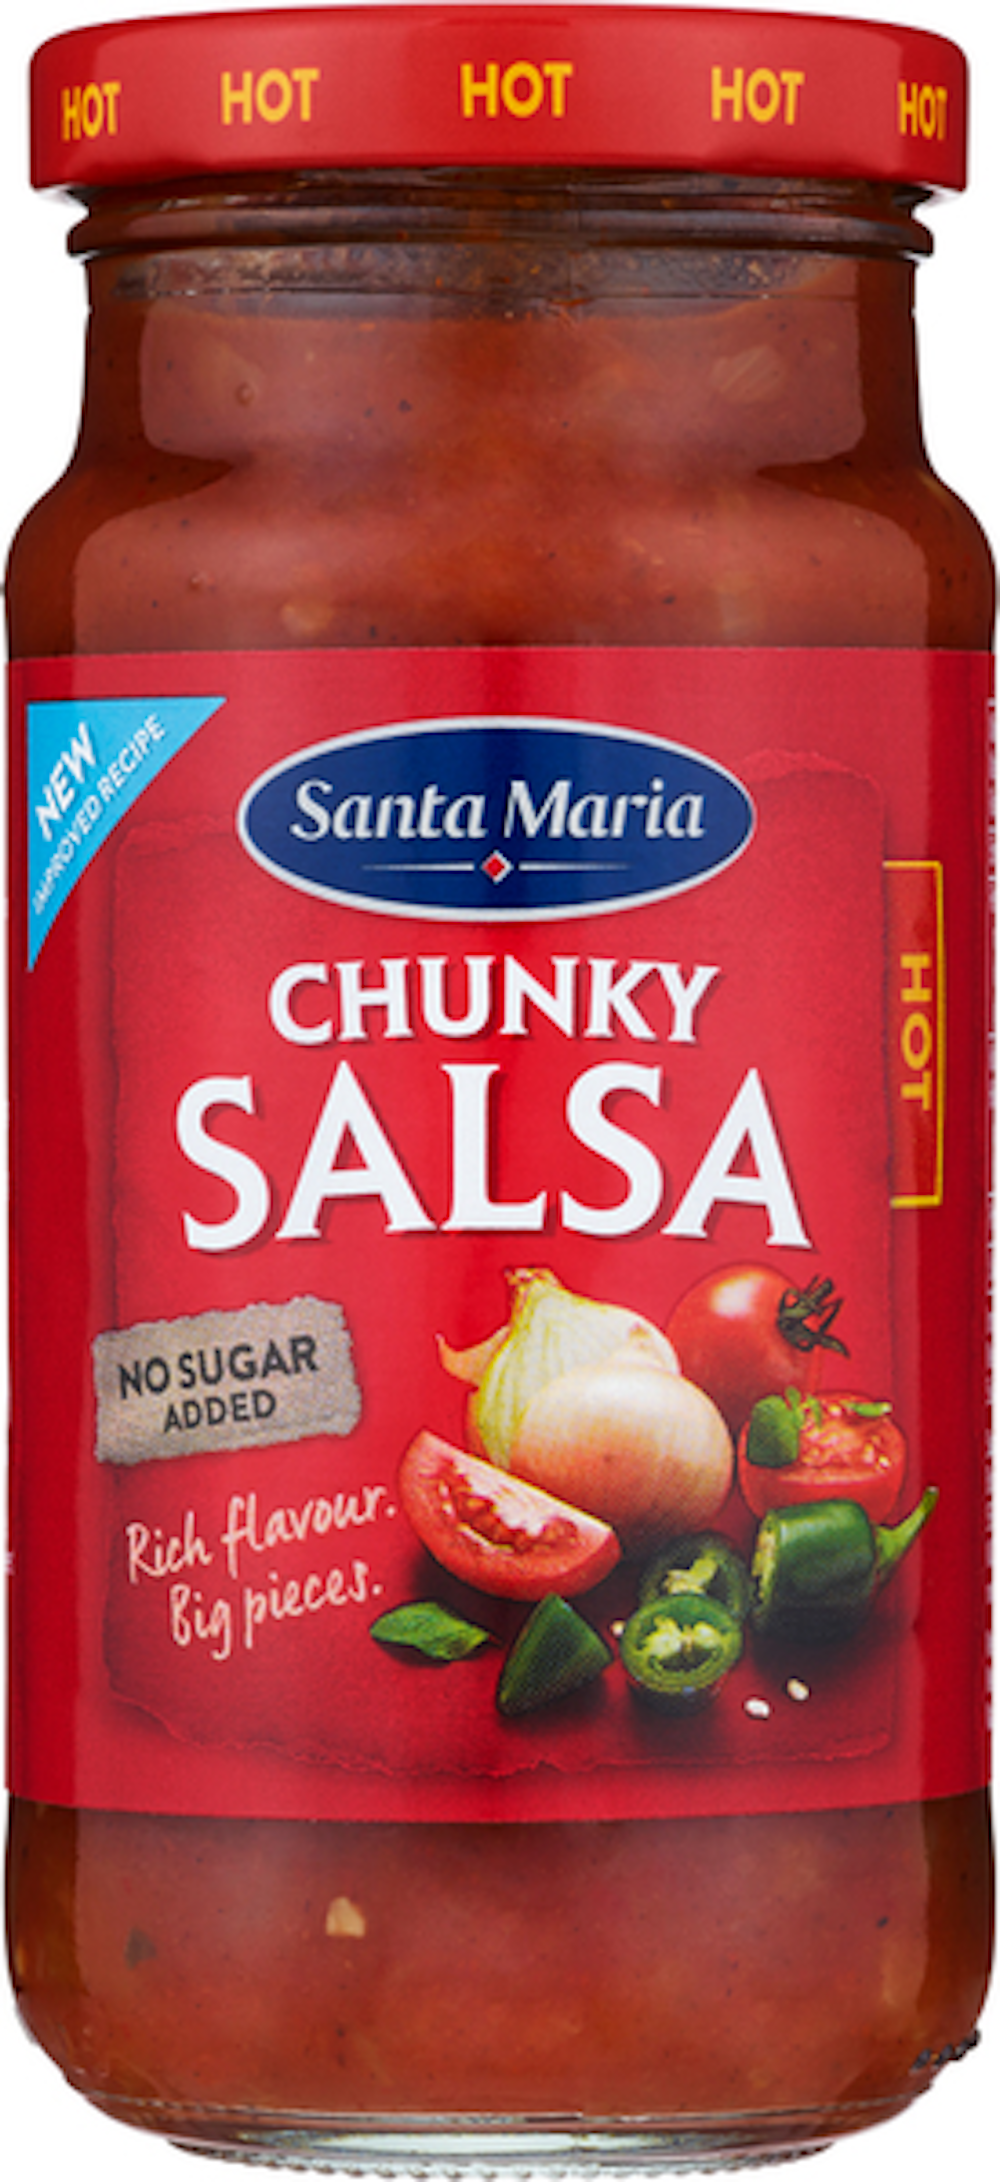 Santa Maria Chunky Salsa Hot tulinen salsakastike 230g — HoReCa-tukku Kespro